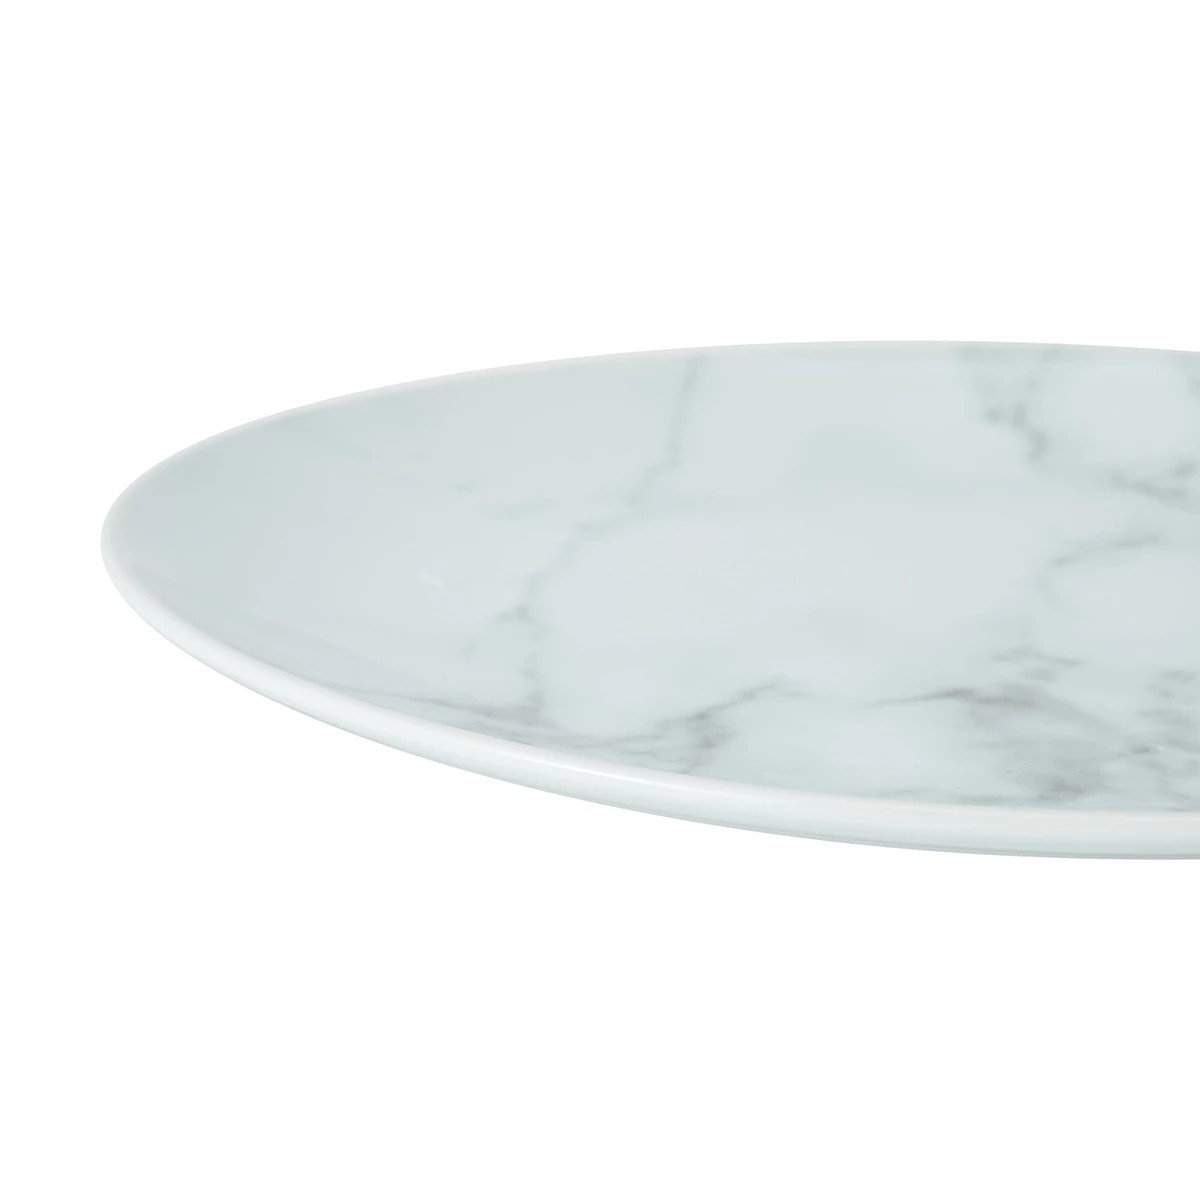 Marble Look Dinner Plate - Anko | Target Australia